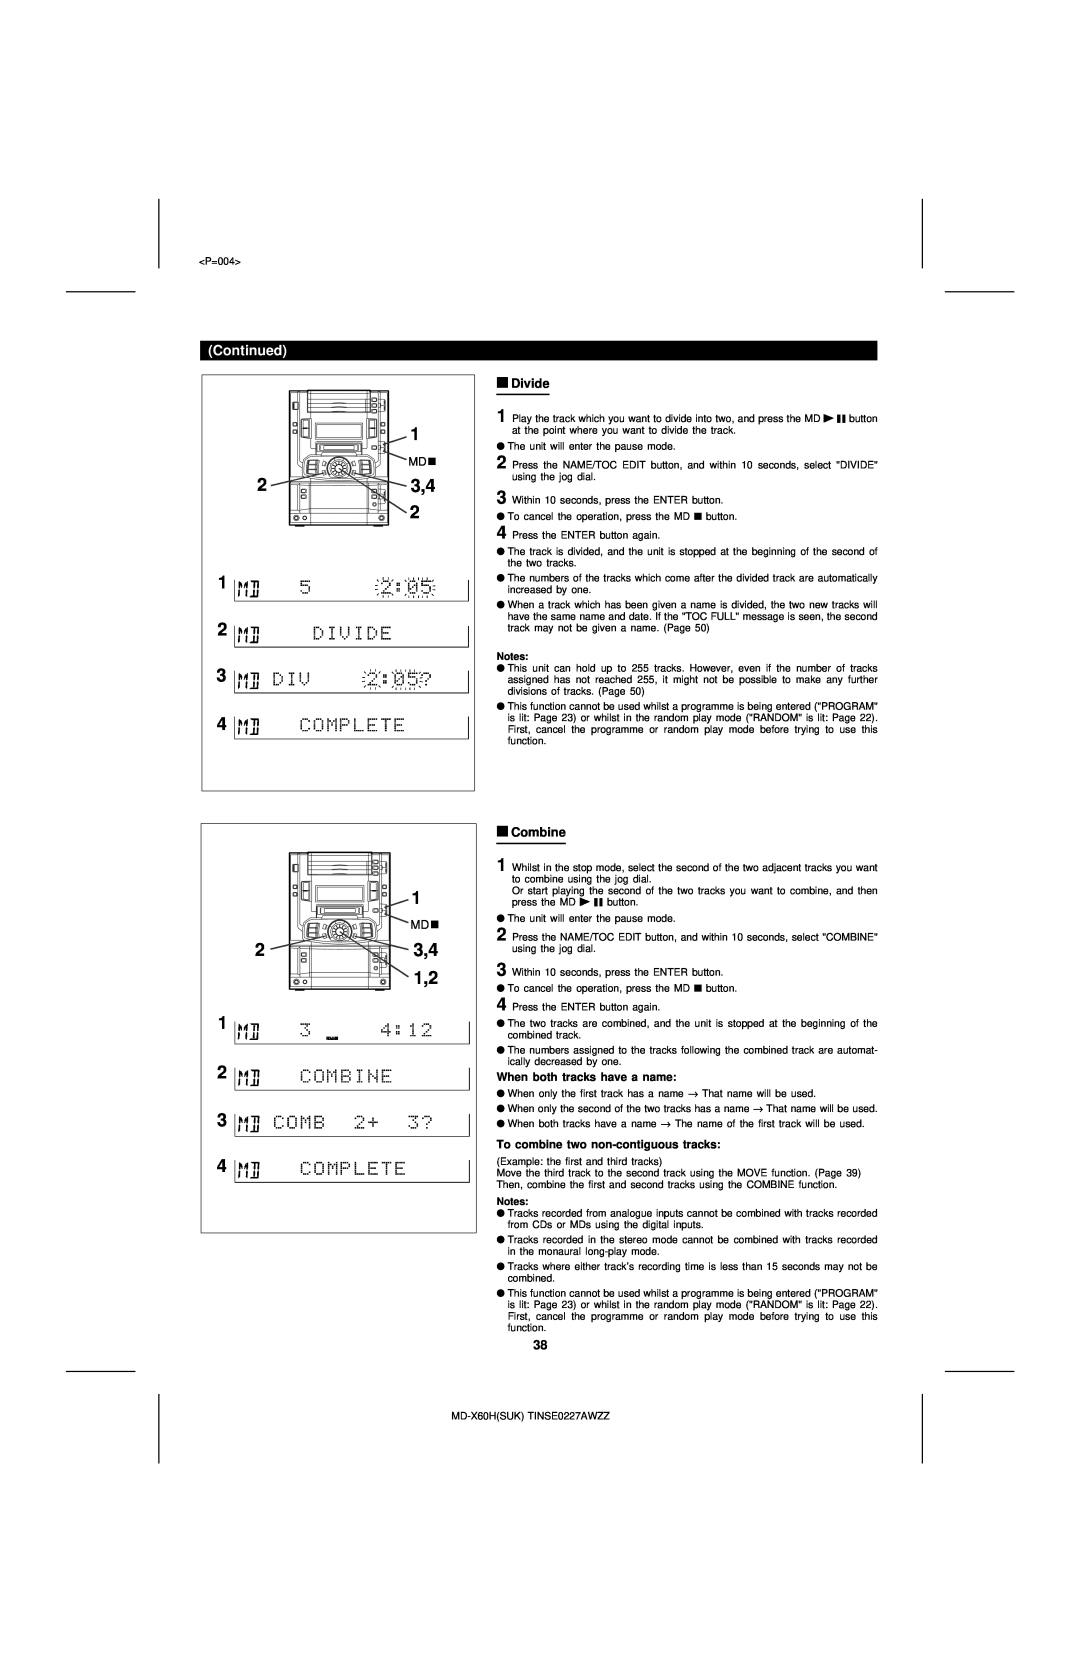 Sharp MD-X60H operation manual 